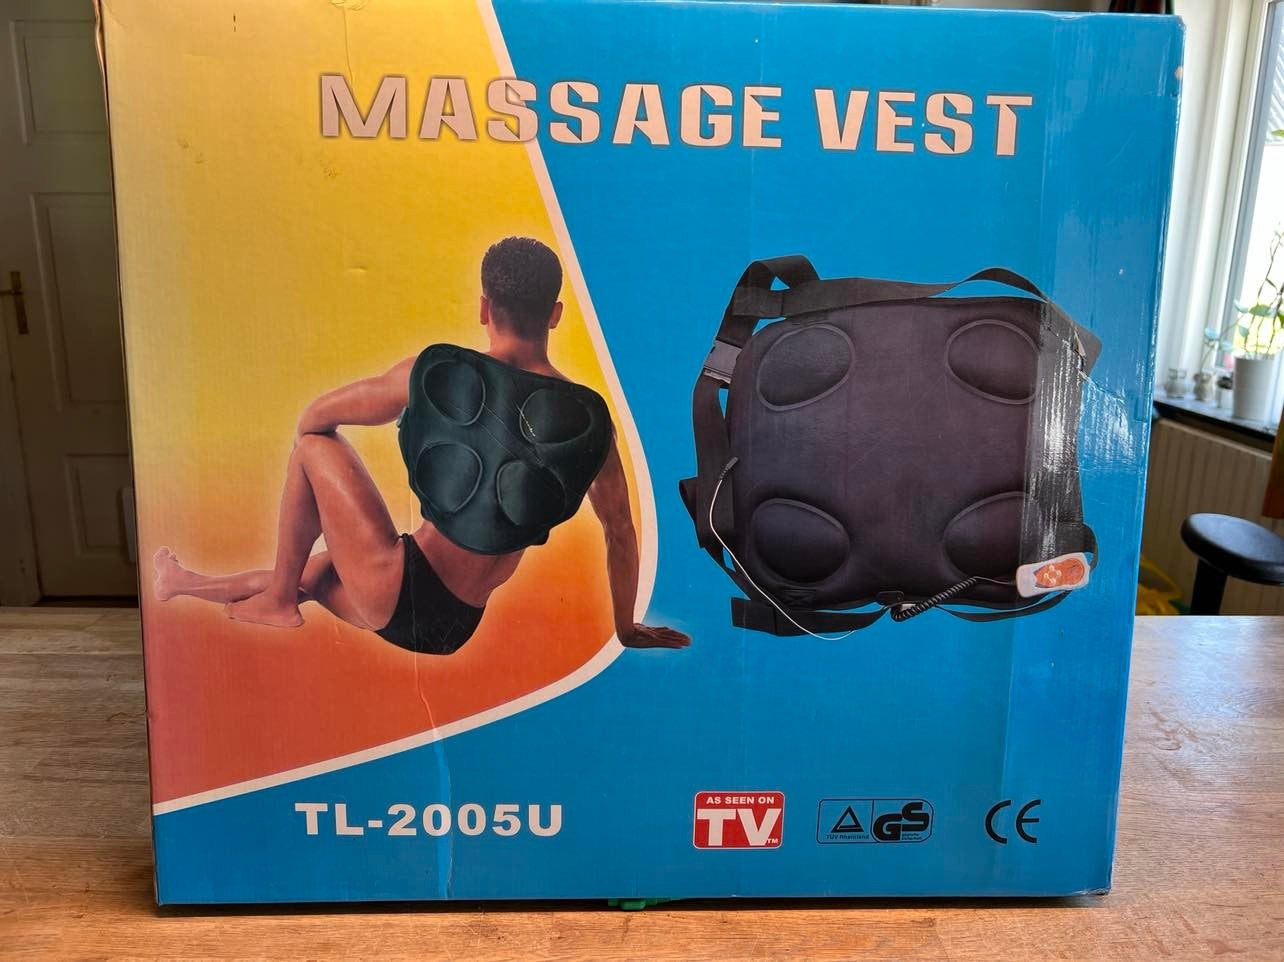 Andet, massagevest